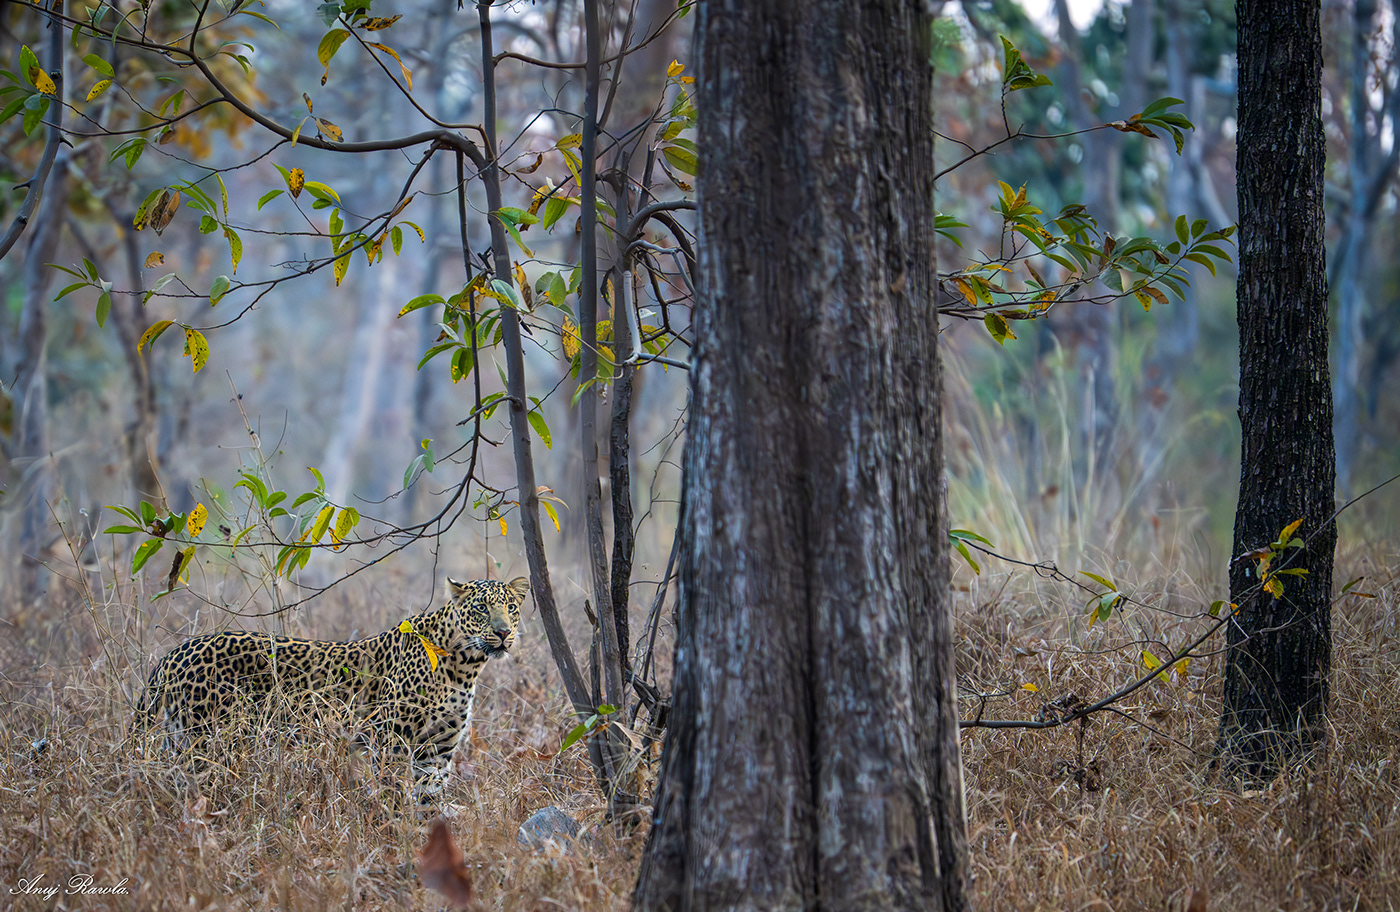 wildlife Wildlife photography Nature Landscape Photography  lightroom birds tiger safari India